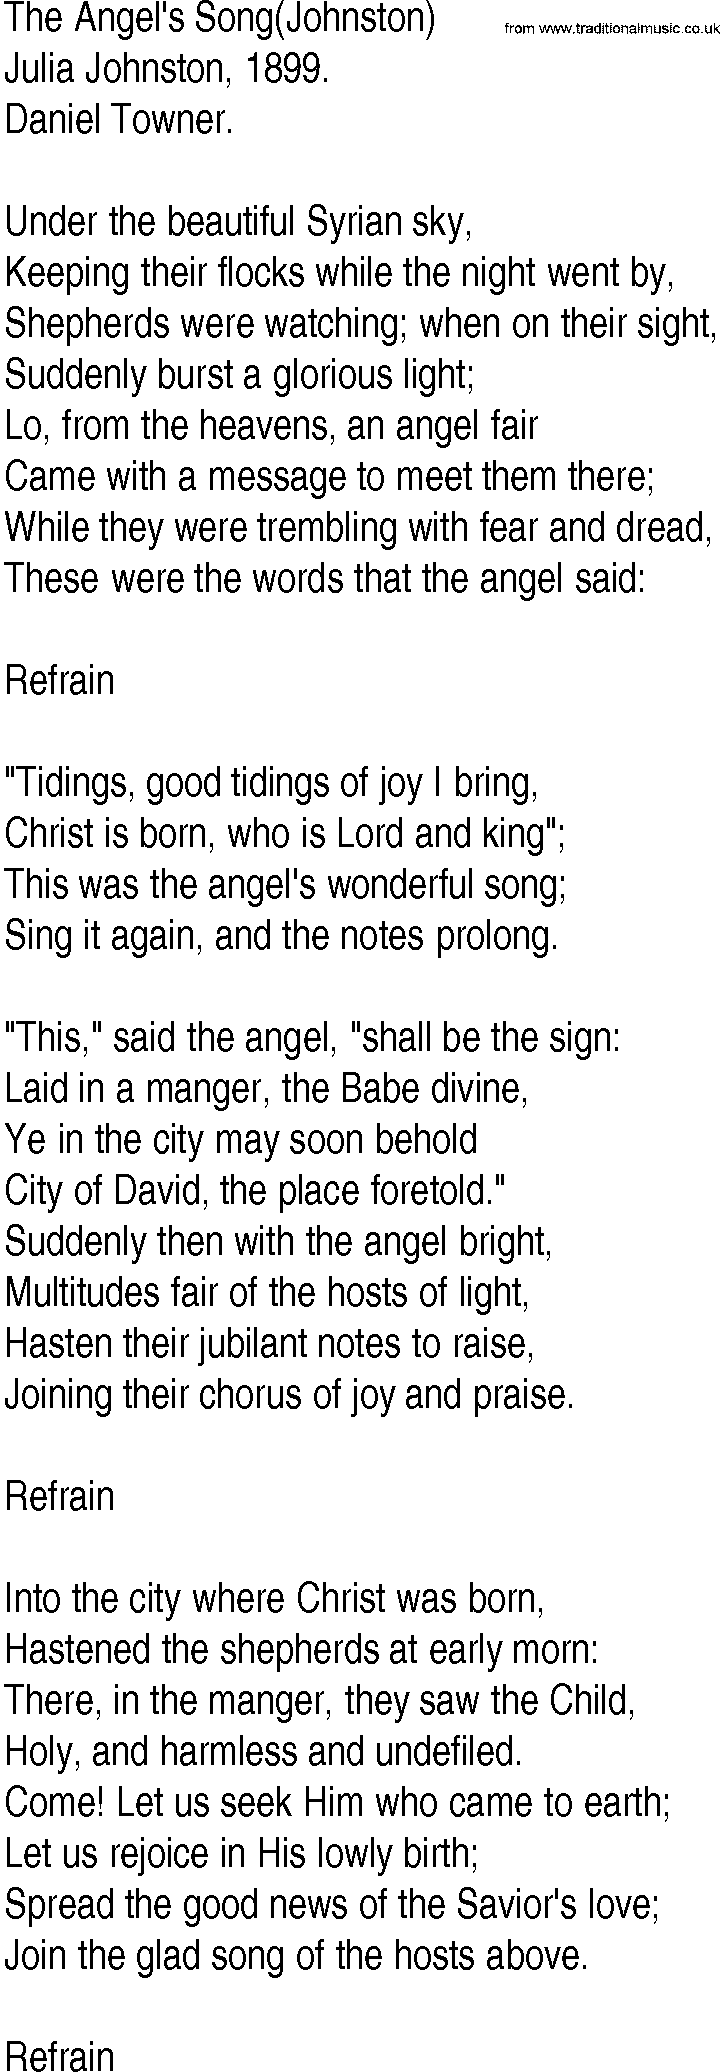 Hymn and Gospel Song: The Angel's Song(Johnston) by Julia Johnston lyrics